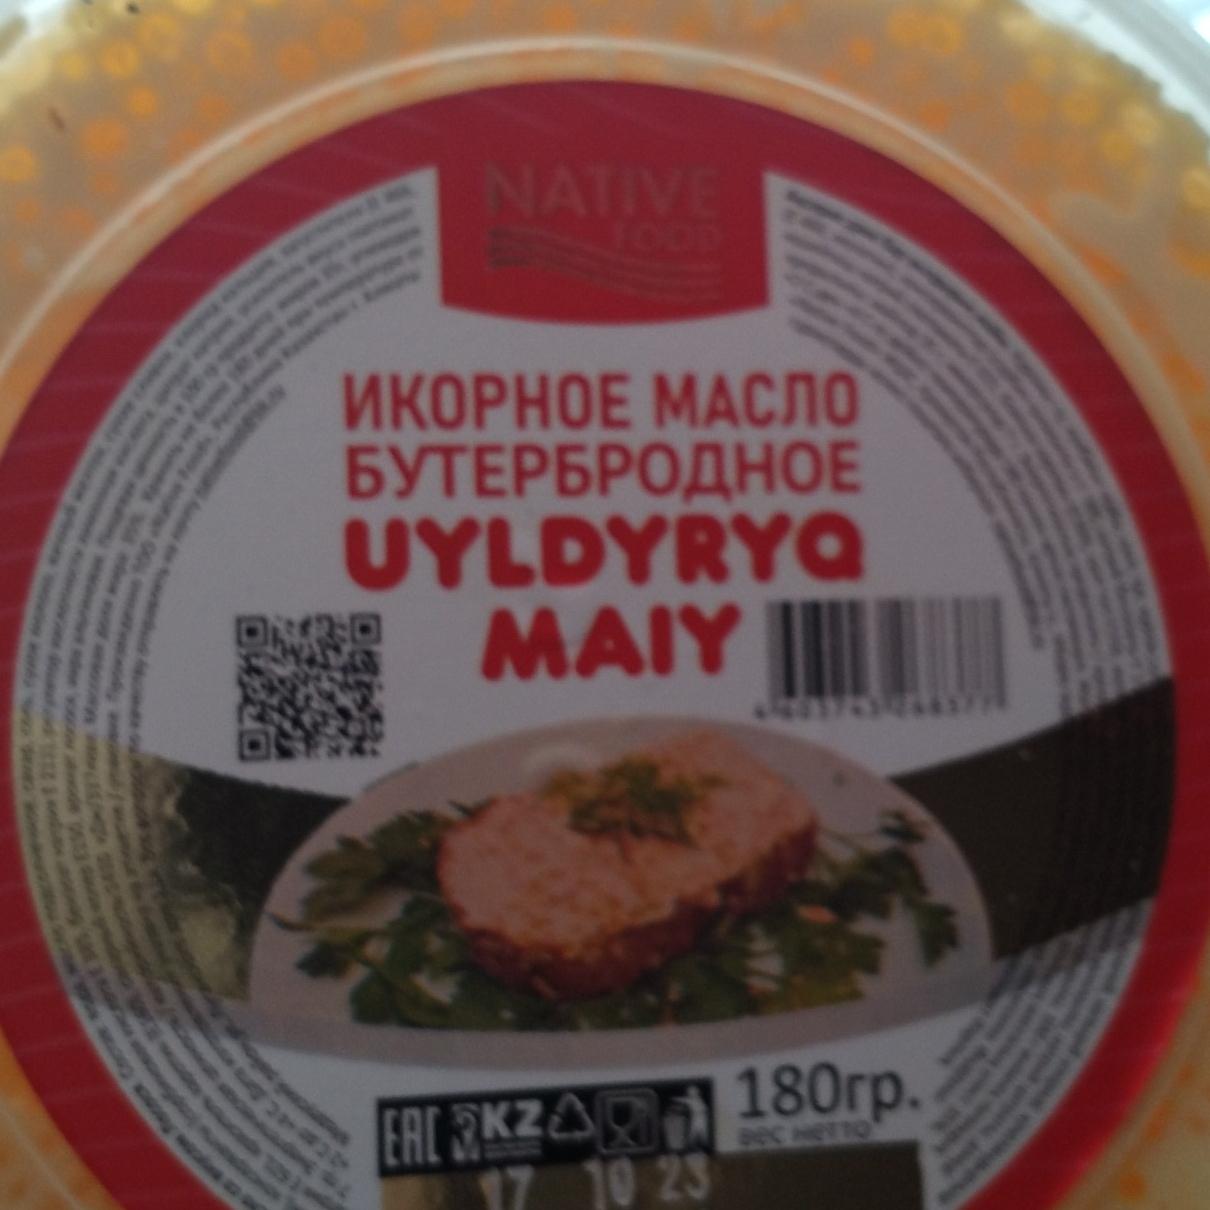 Фото - Икорное масло бутербродное Uyldyryq maiy Native